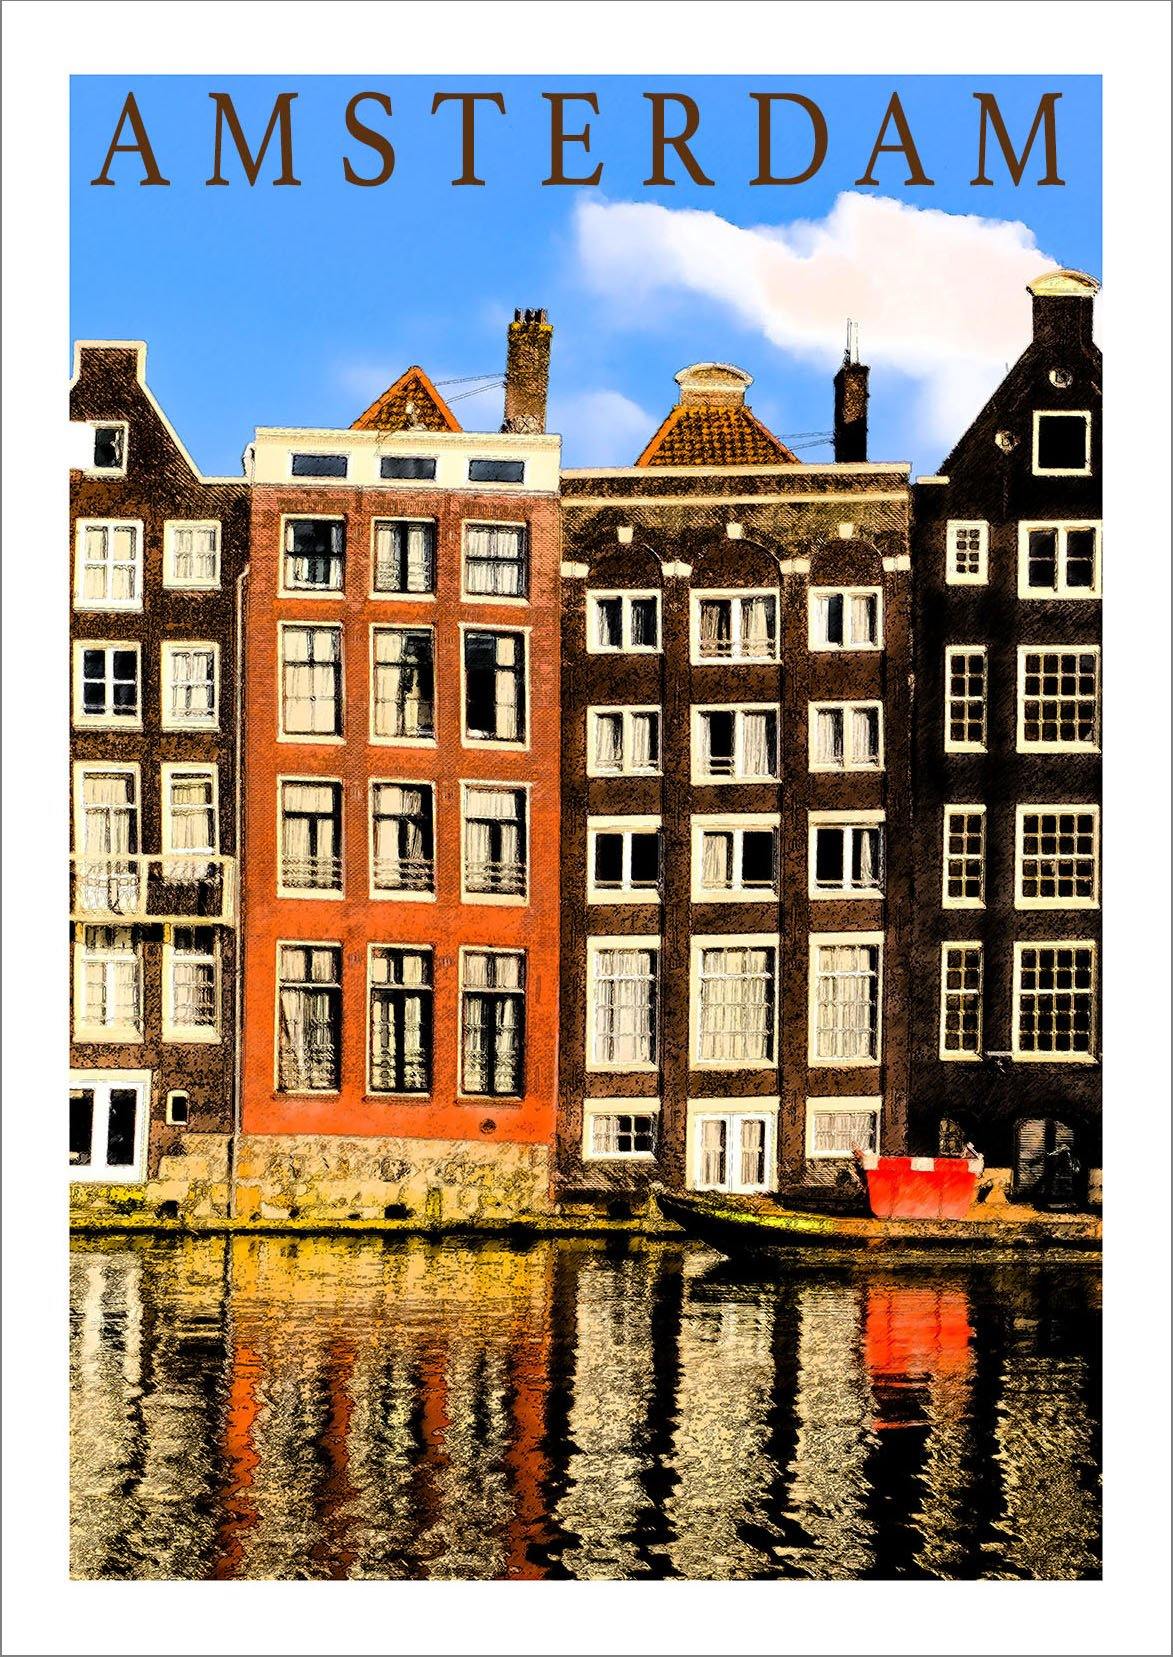 AMSTERDAM HOLLAND PRINT: Vintage Travel Poster - Pimlico Prints